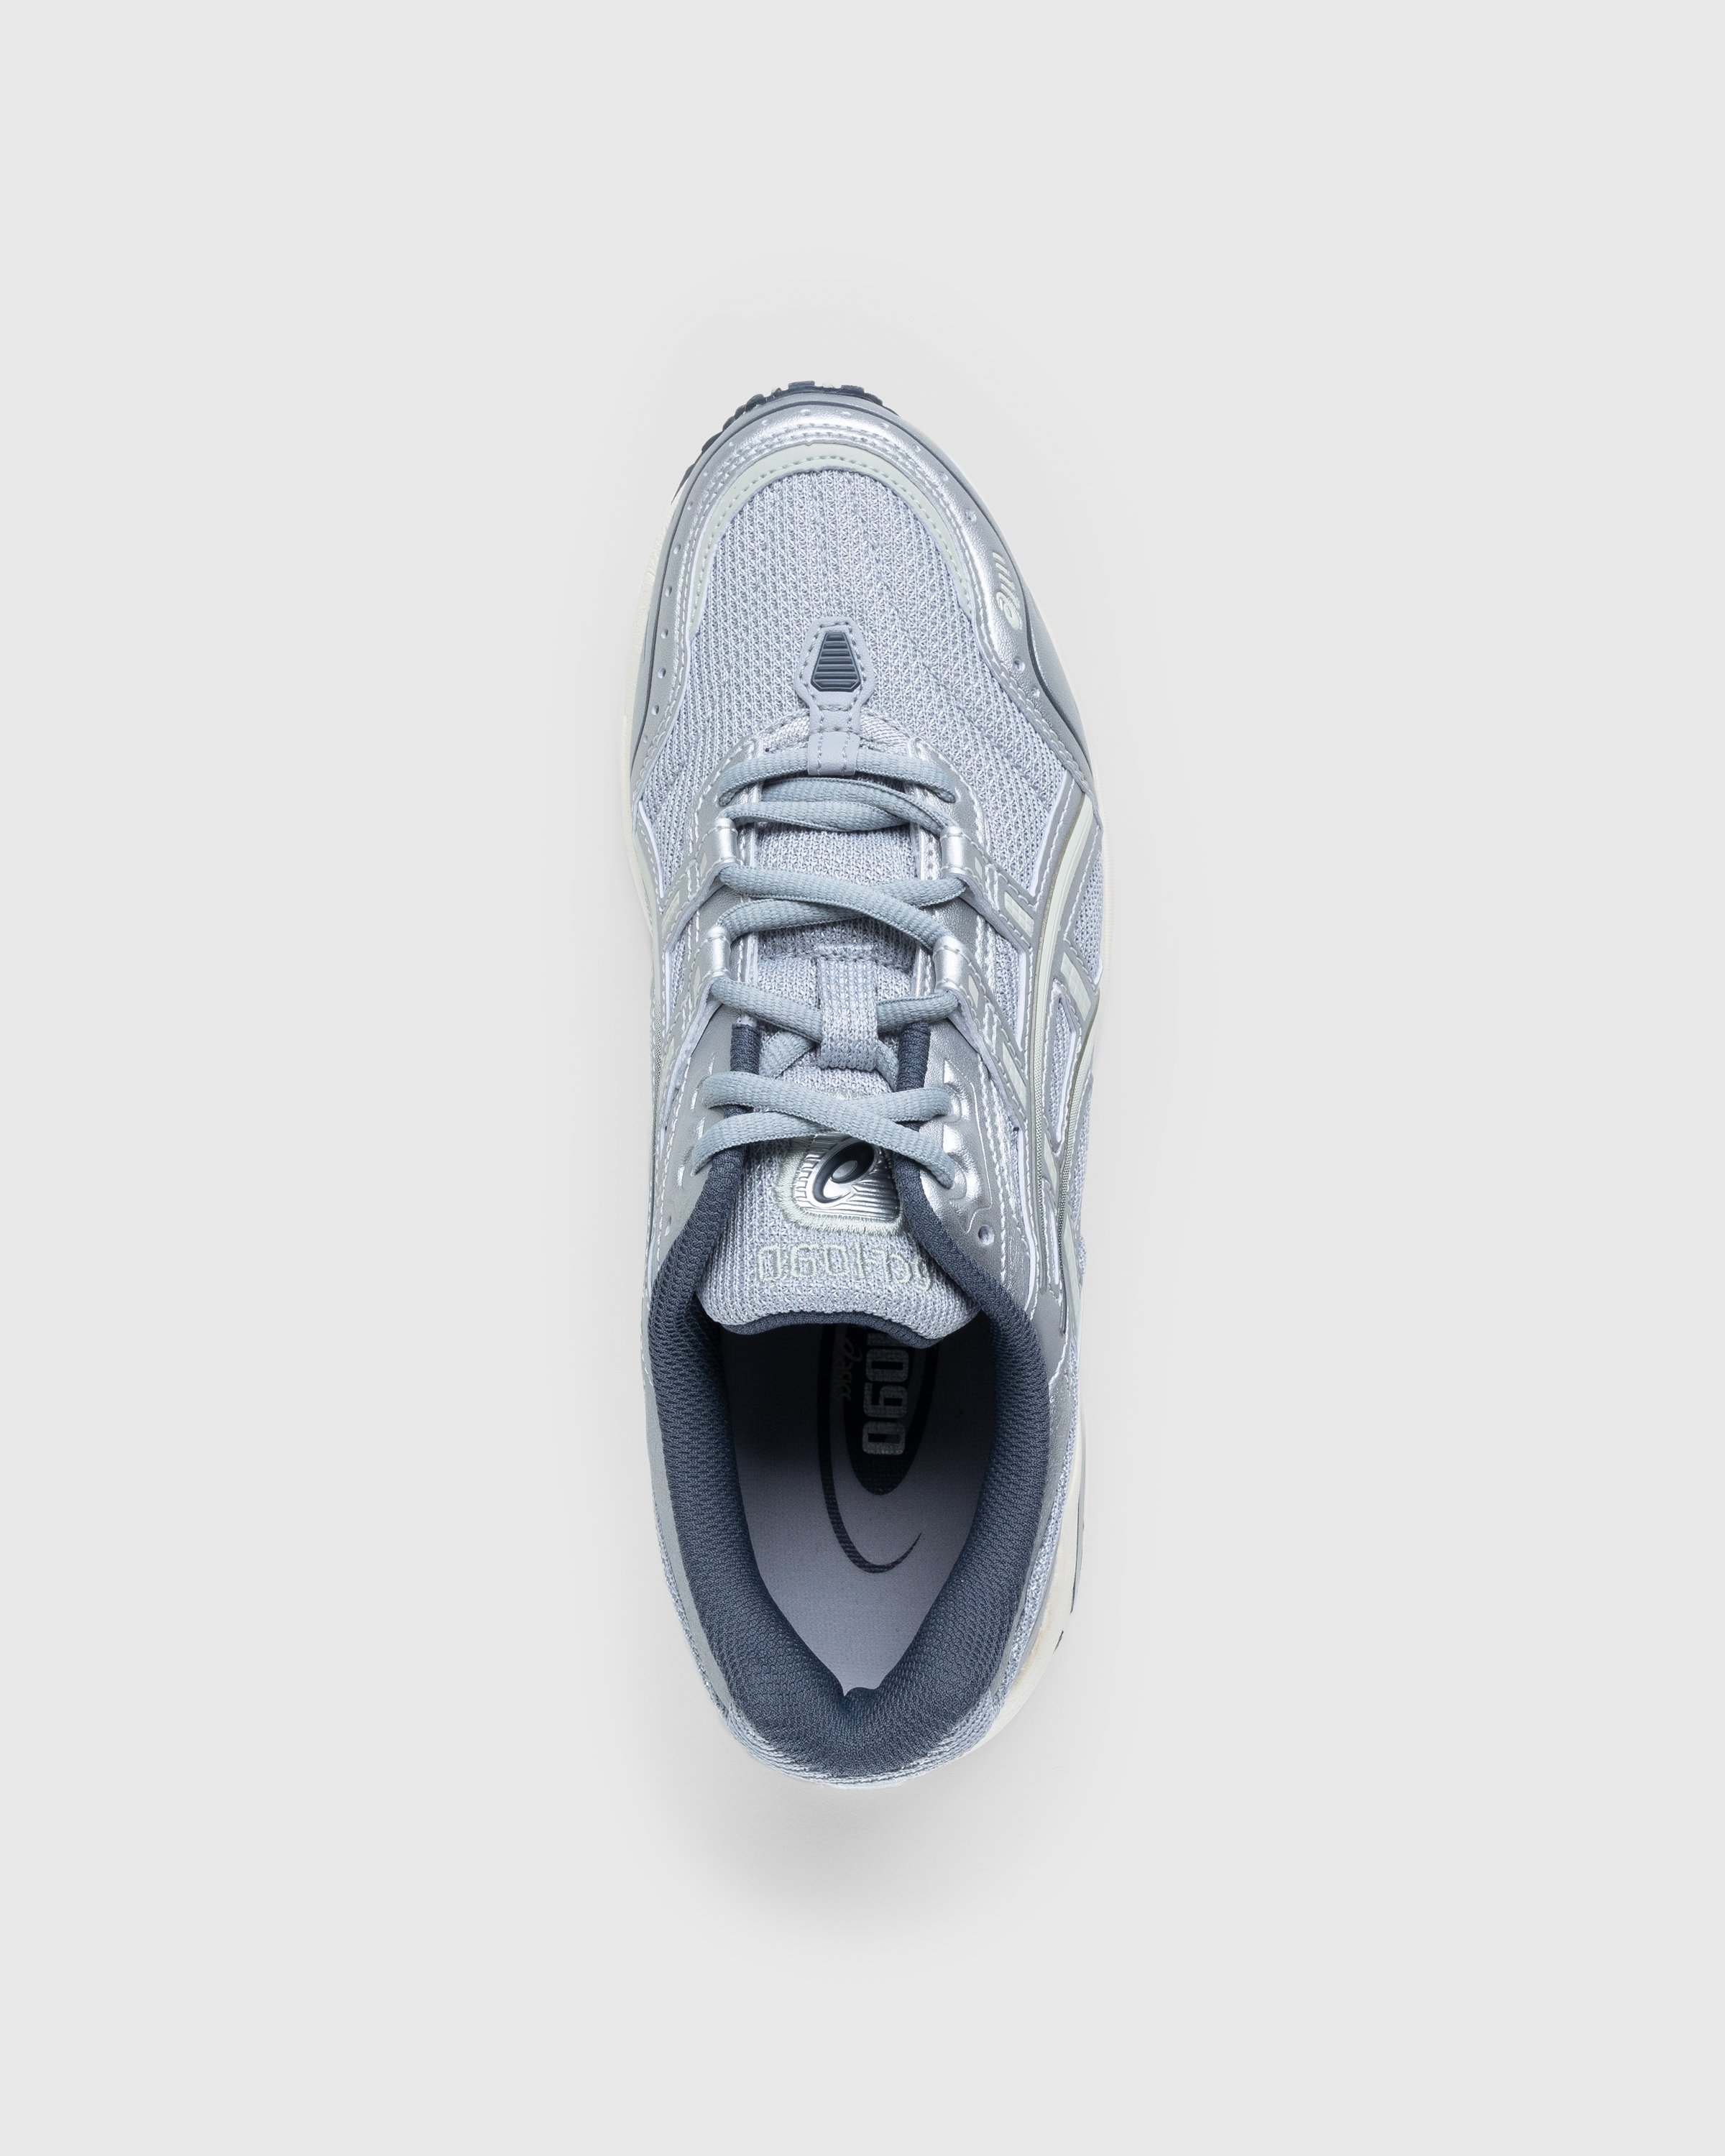 asics - GEL-1090 Piedmont Gray/Tarmac - Footwear - Grey - Image 5